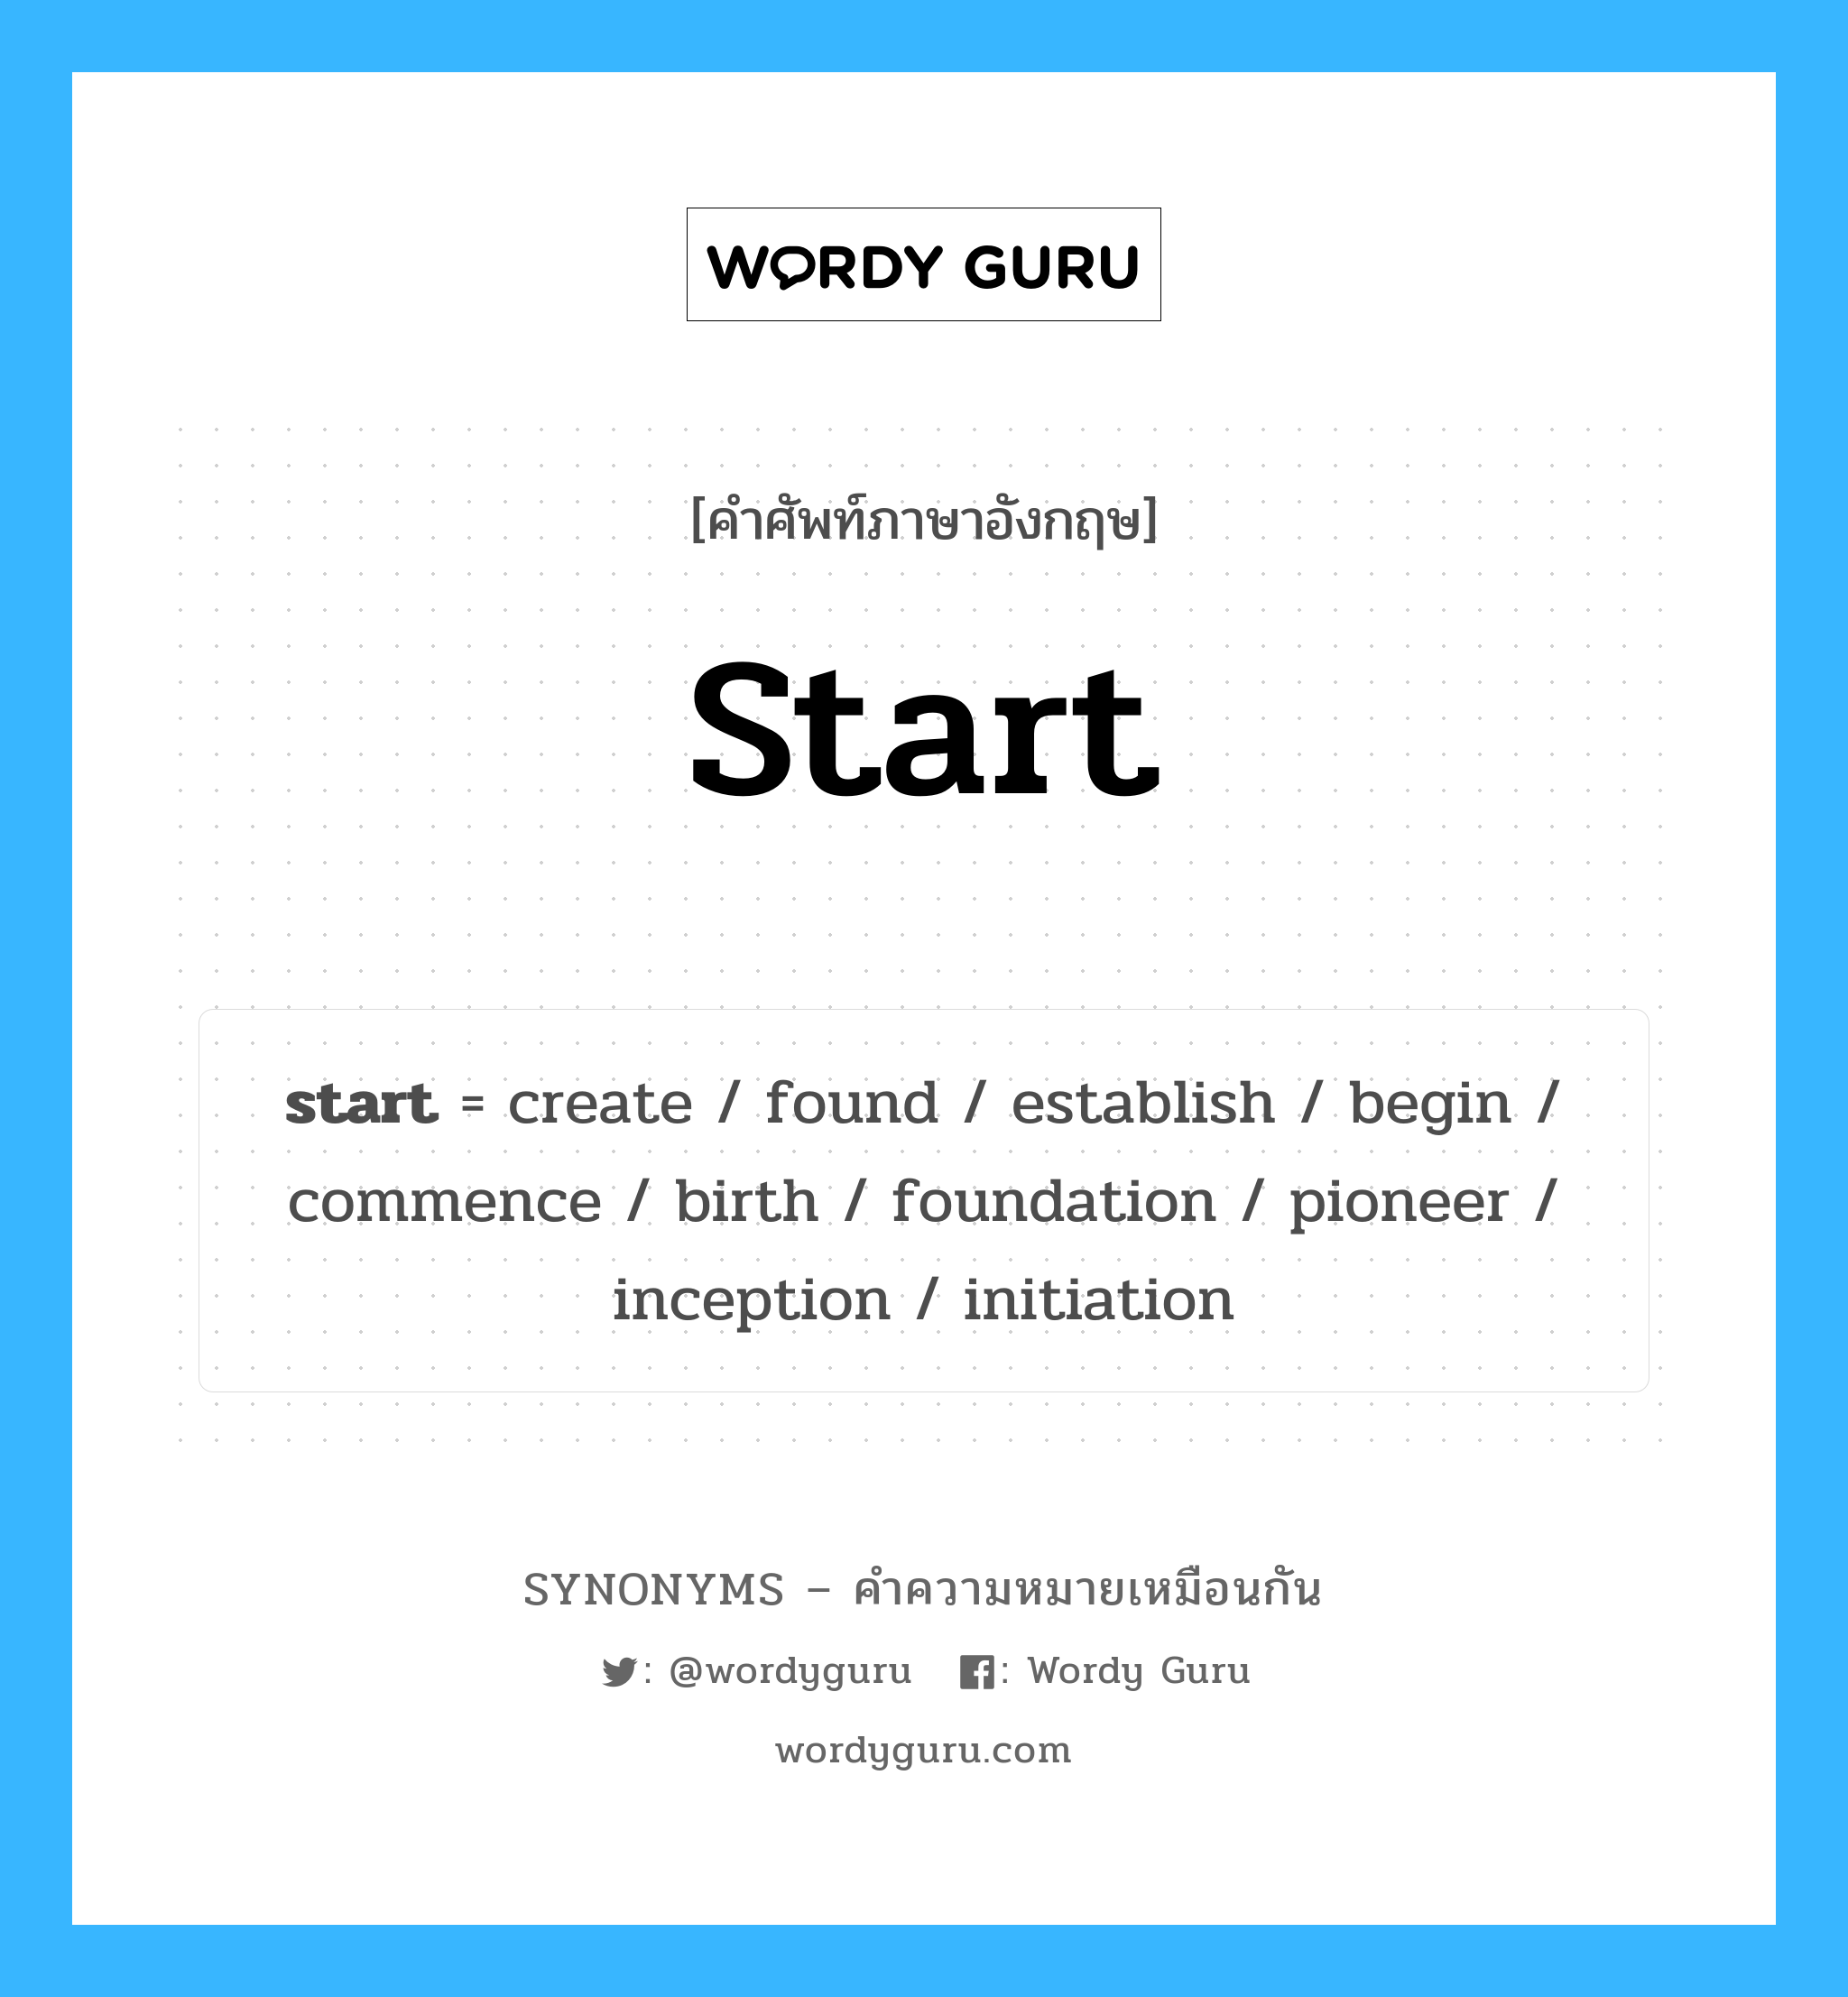 pioneer เป็นหนึ่งใน start และมีคำอื่น ๆ อีกดังนี้, คำศัพท์ภาษาอังกฤษ pioneer ความหมายคล้ายกันกับ start แปลว่า ผู้บุกเบิก หมวด start